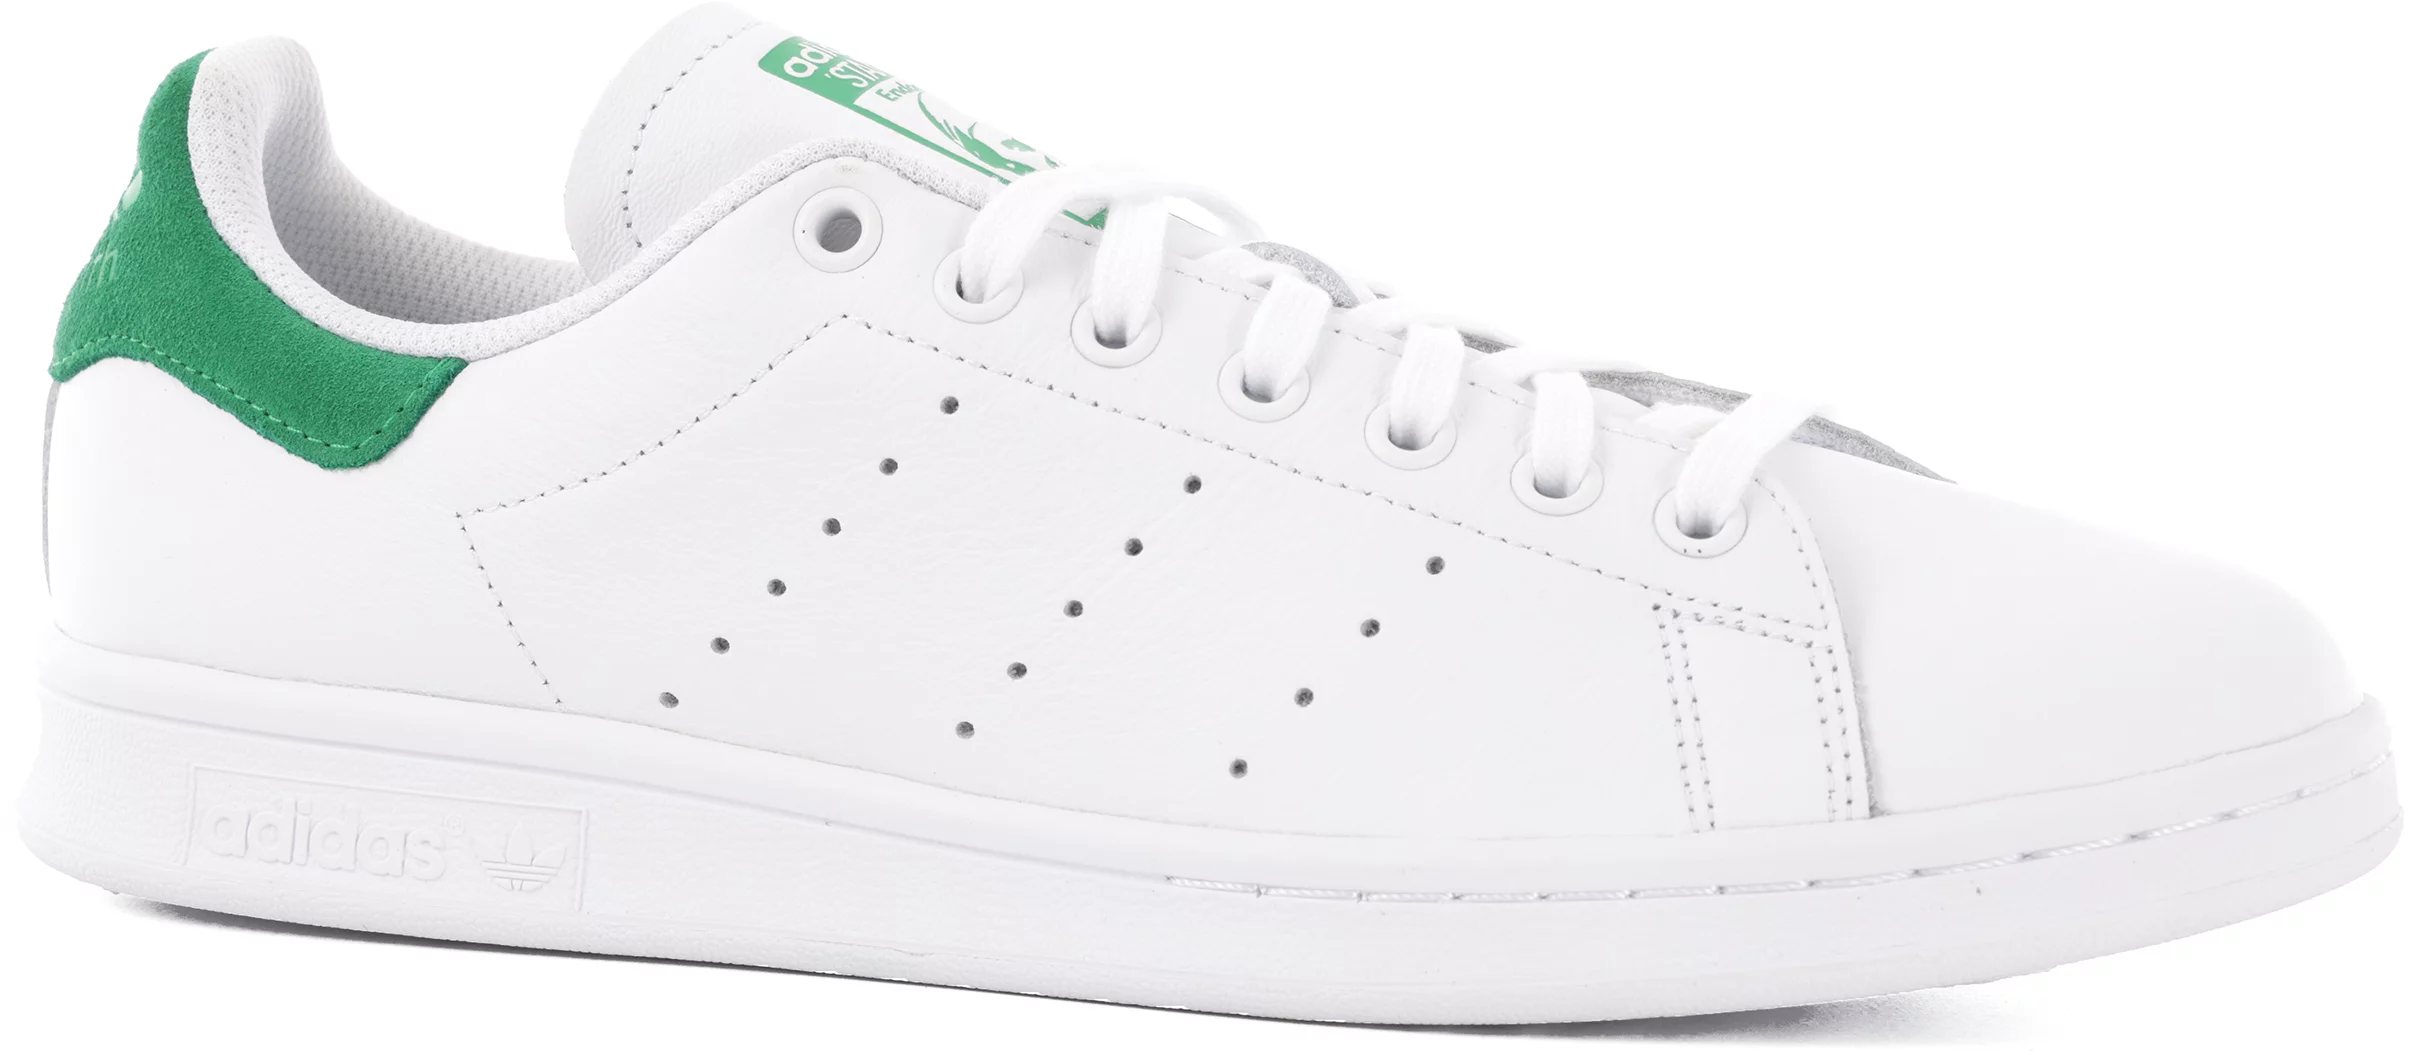 overfladisk Betjening mulig Så hurtigt som en flash Adidas Stan Smith ADV Skate Shoes - footwear white/footwear white/green -  Free Shipping | Tactics